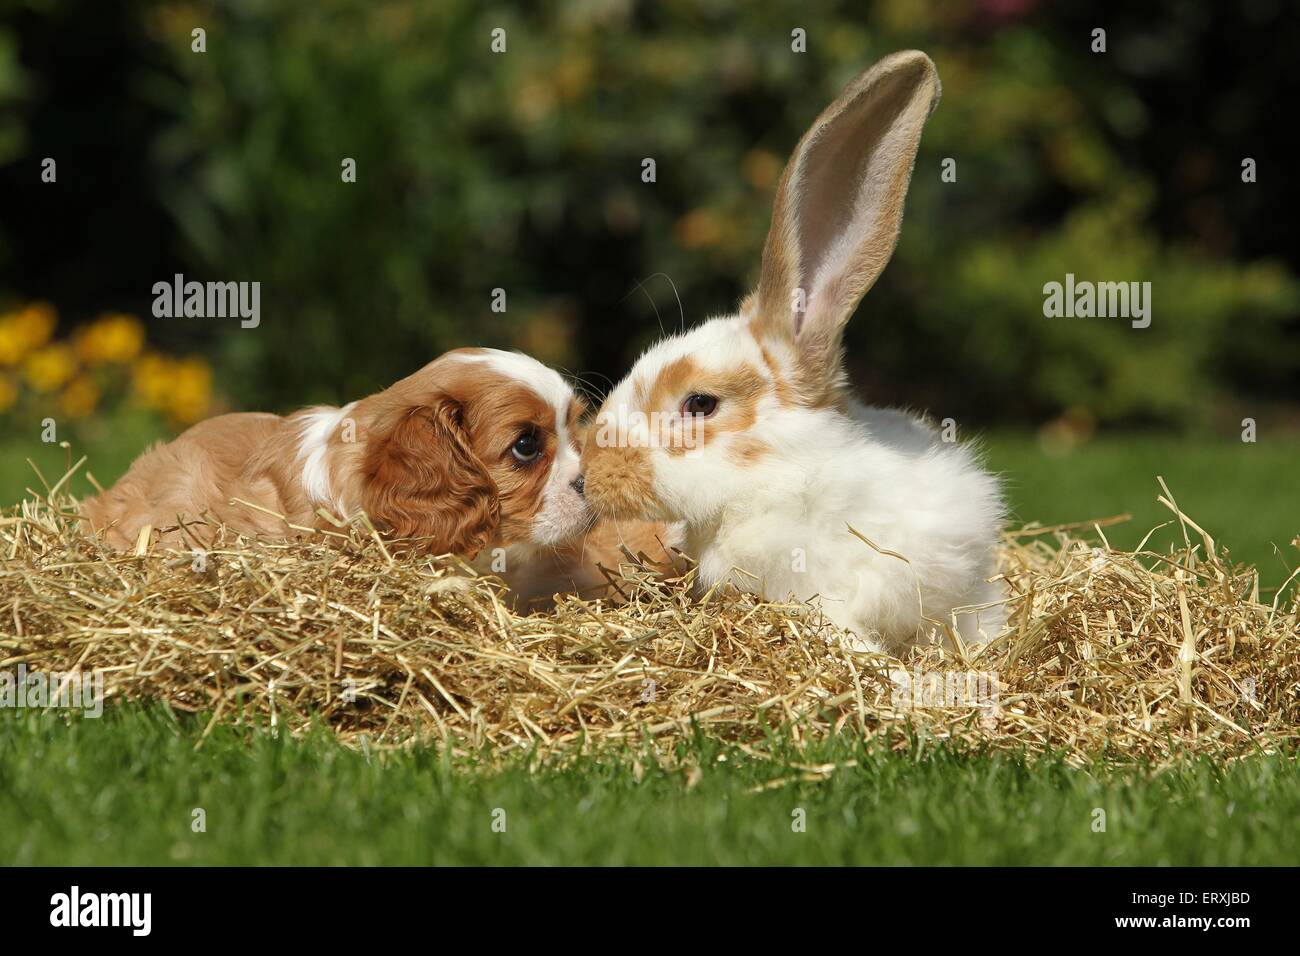 dog and rabbit Stock Photo